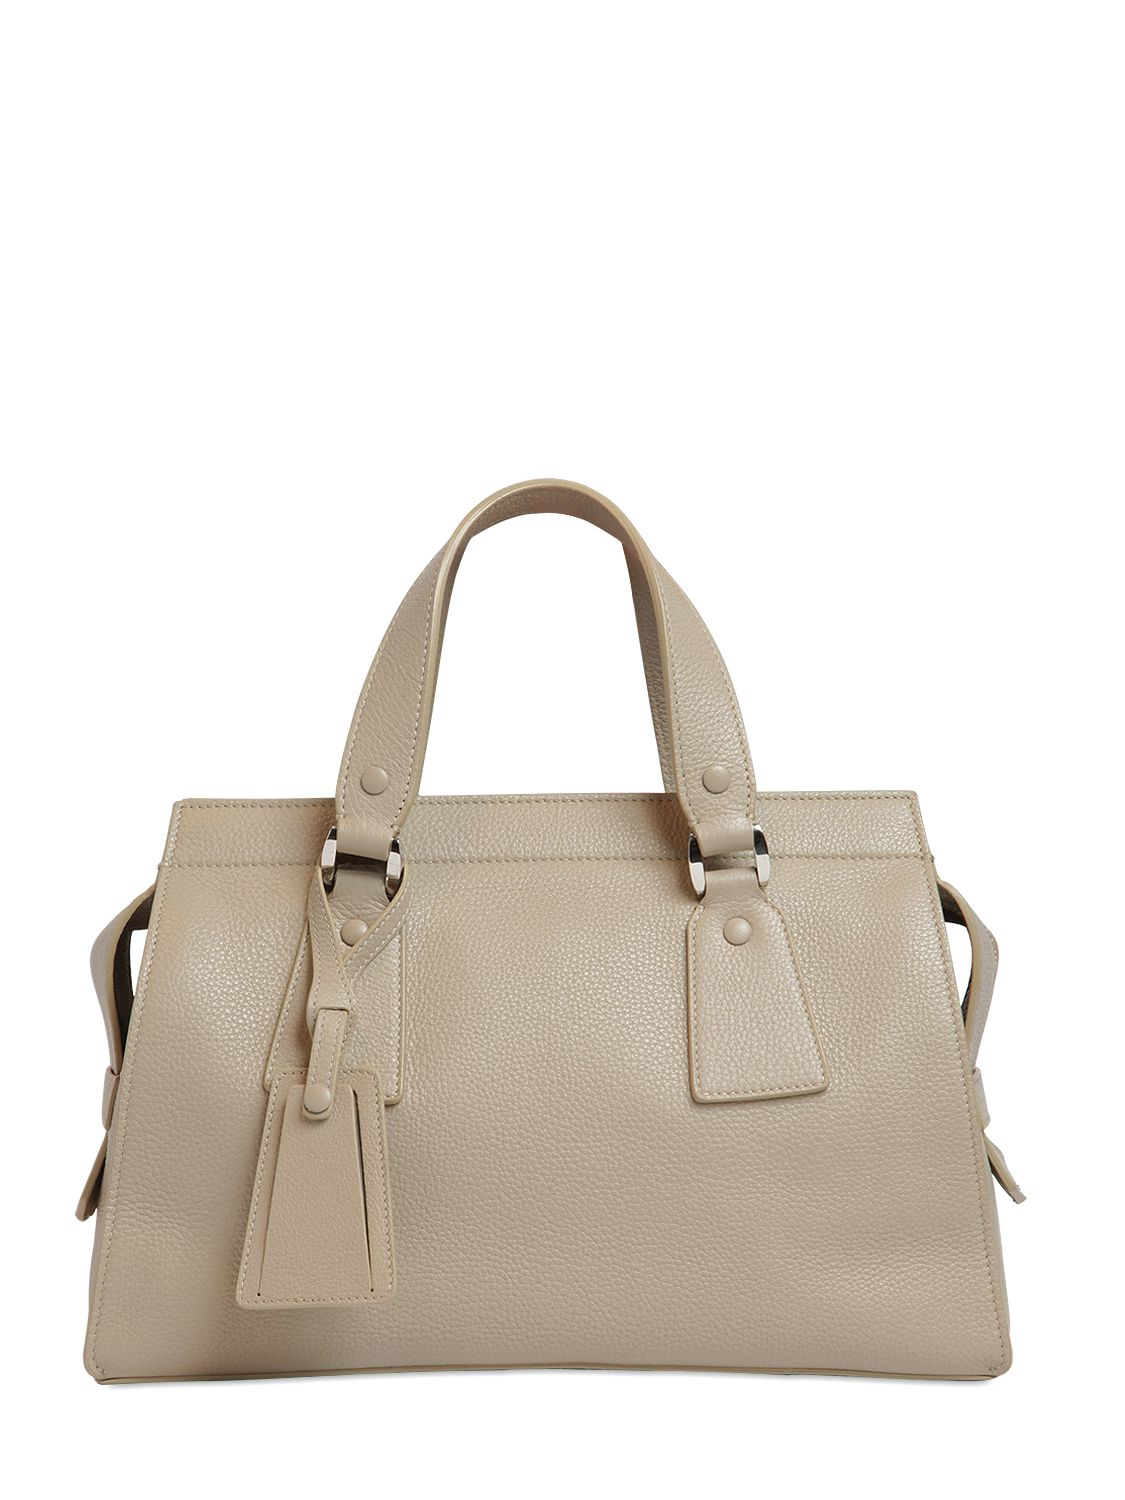 Giorgio Armani Le Sac 11 Leather Top Handle Bag in Natural | Lyst